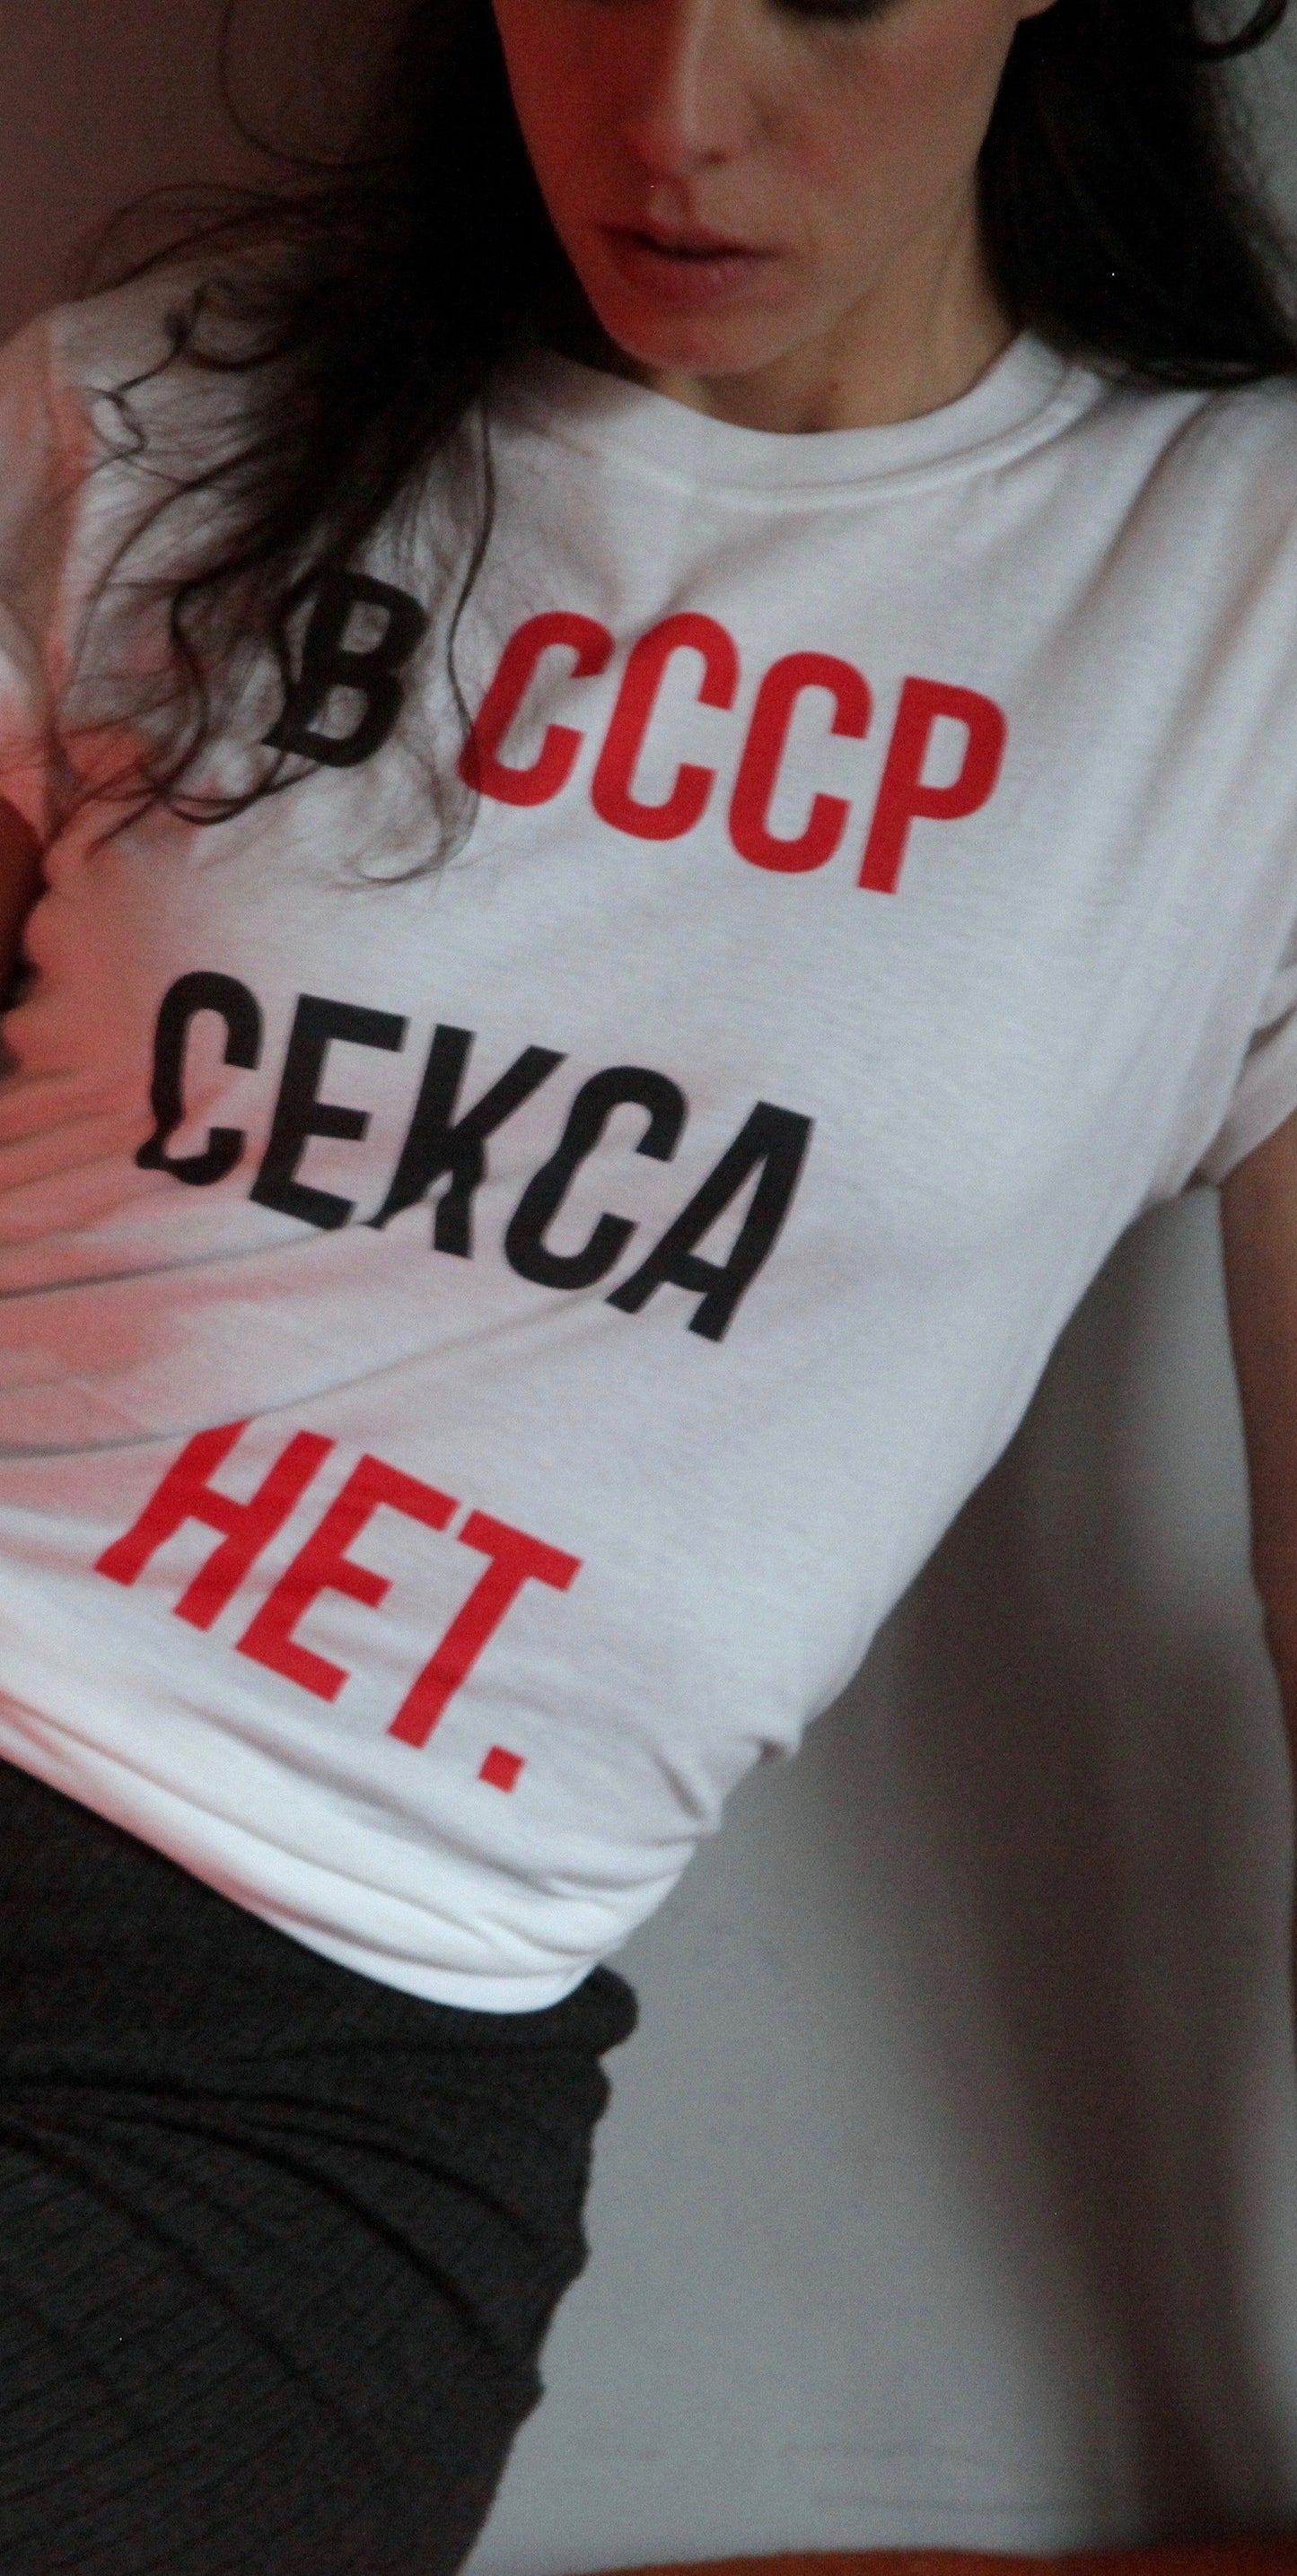 No Sex In USSR Unisex T-Shirt (Light)